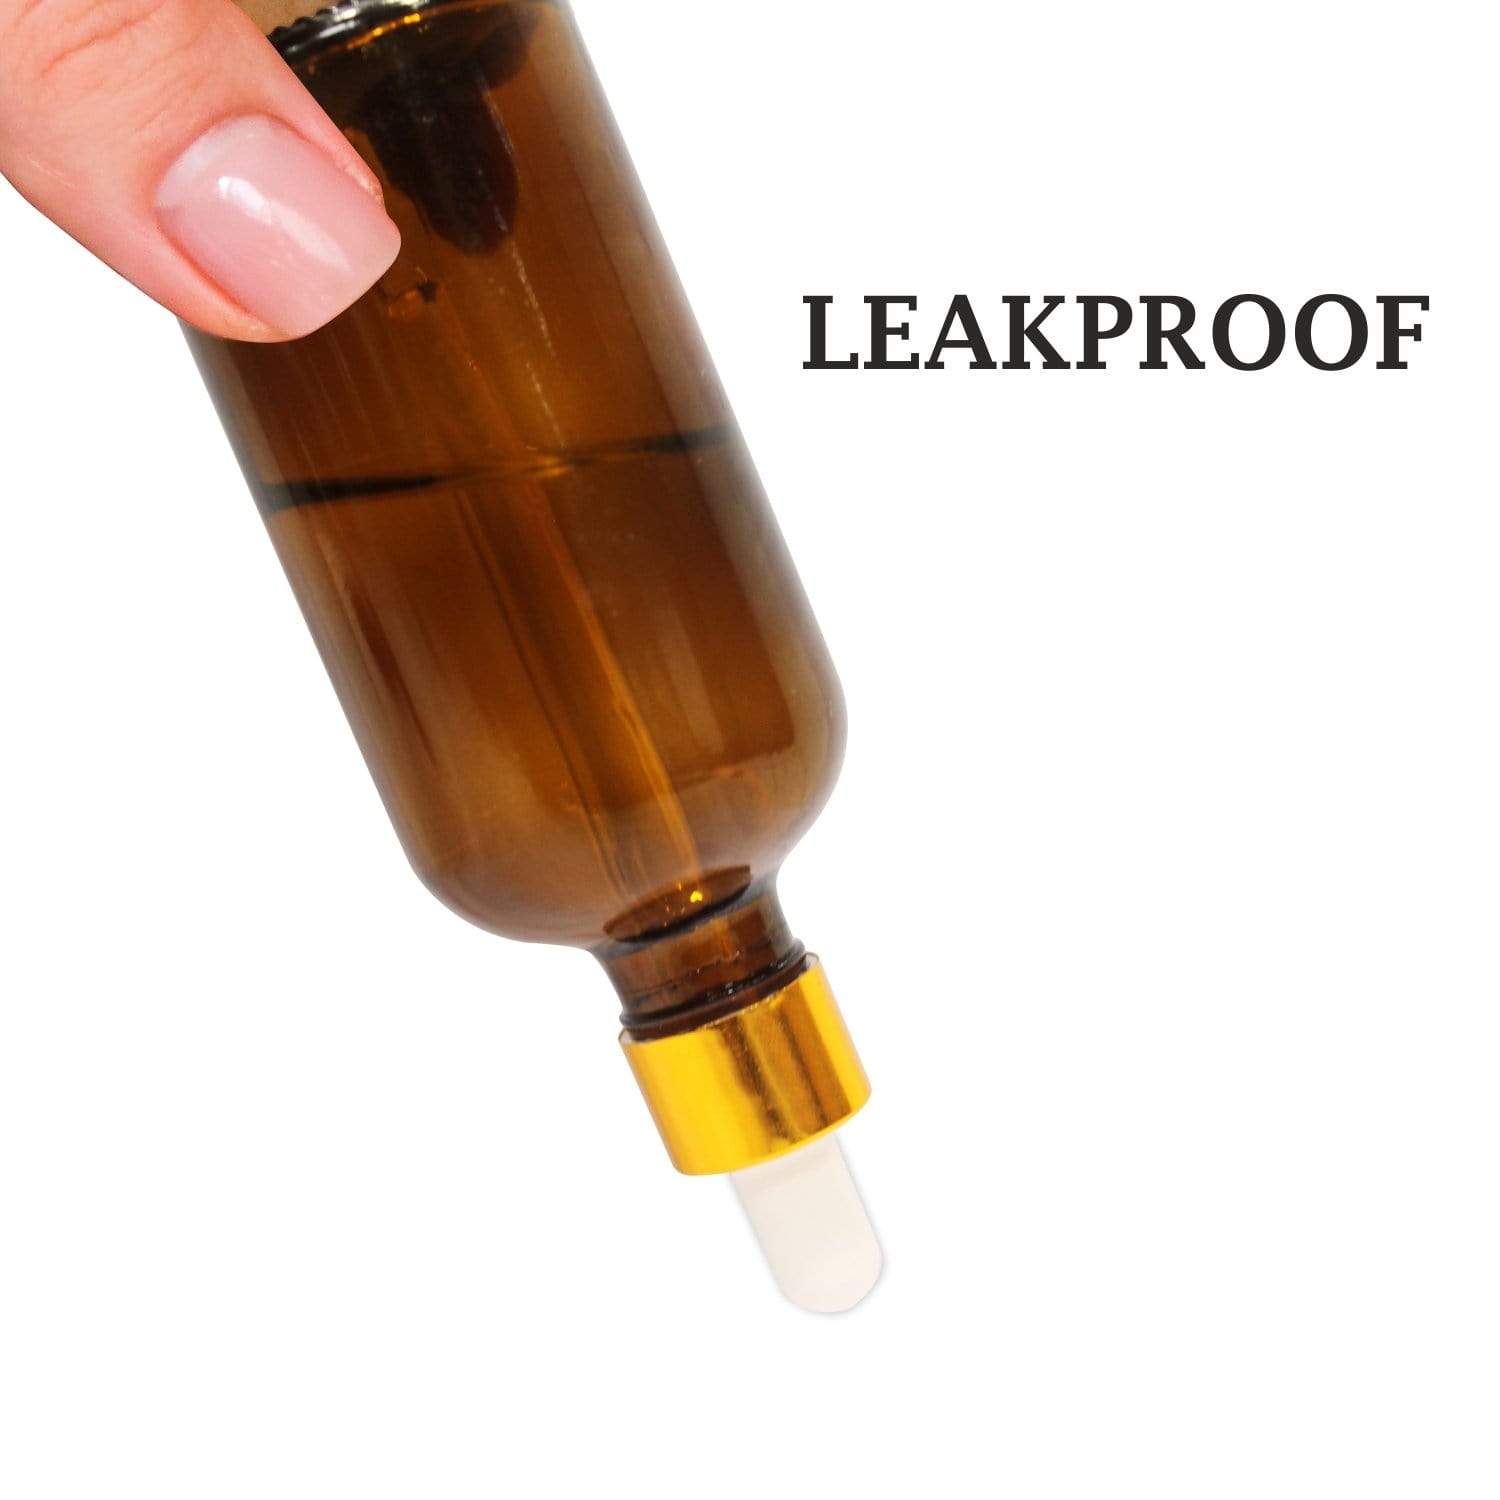 Glass Amber bottle with golden dropper 2 Packs – Shoprythm